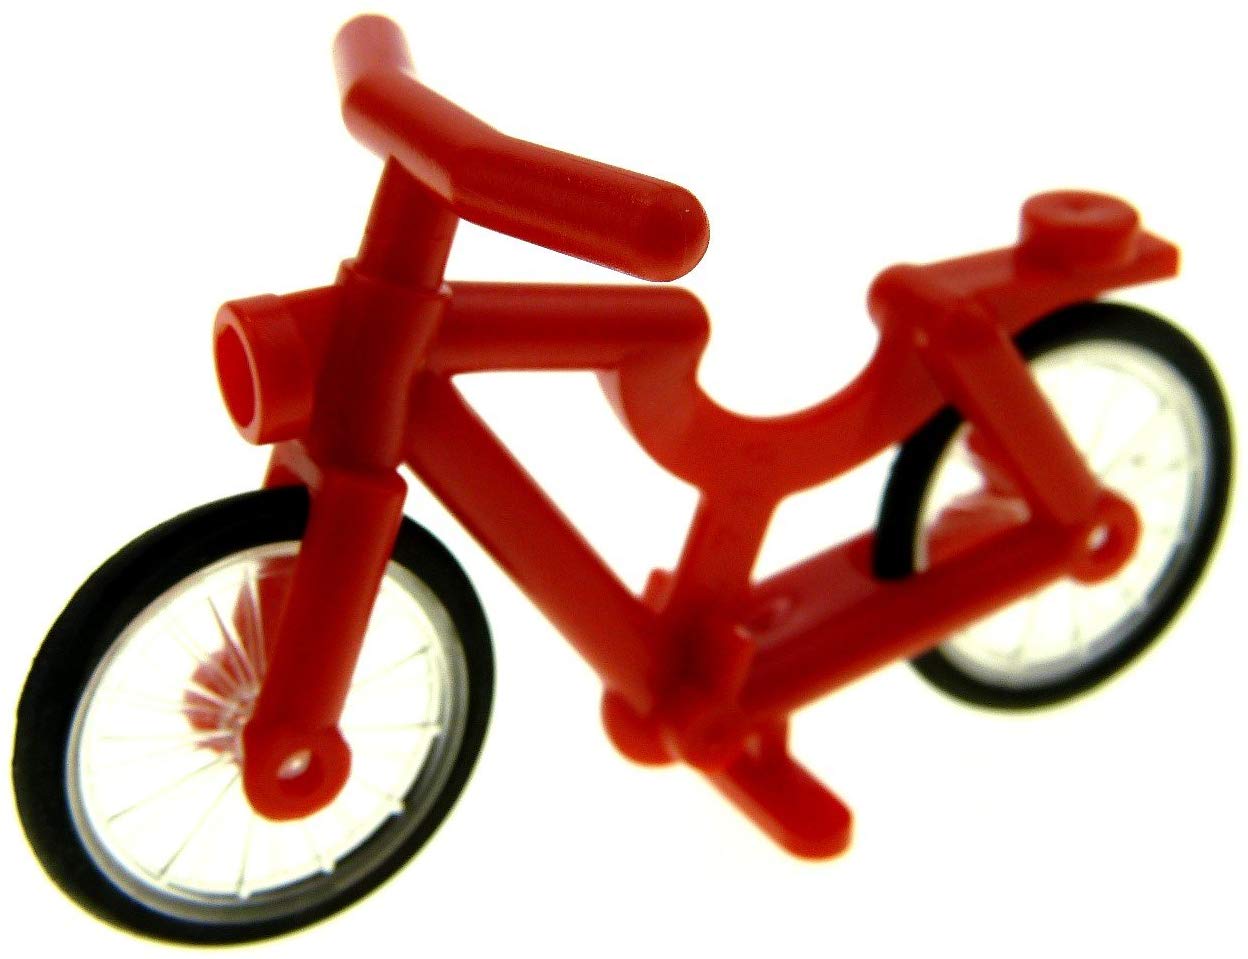 Lego City 1 Red Bike